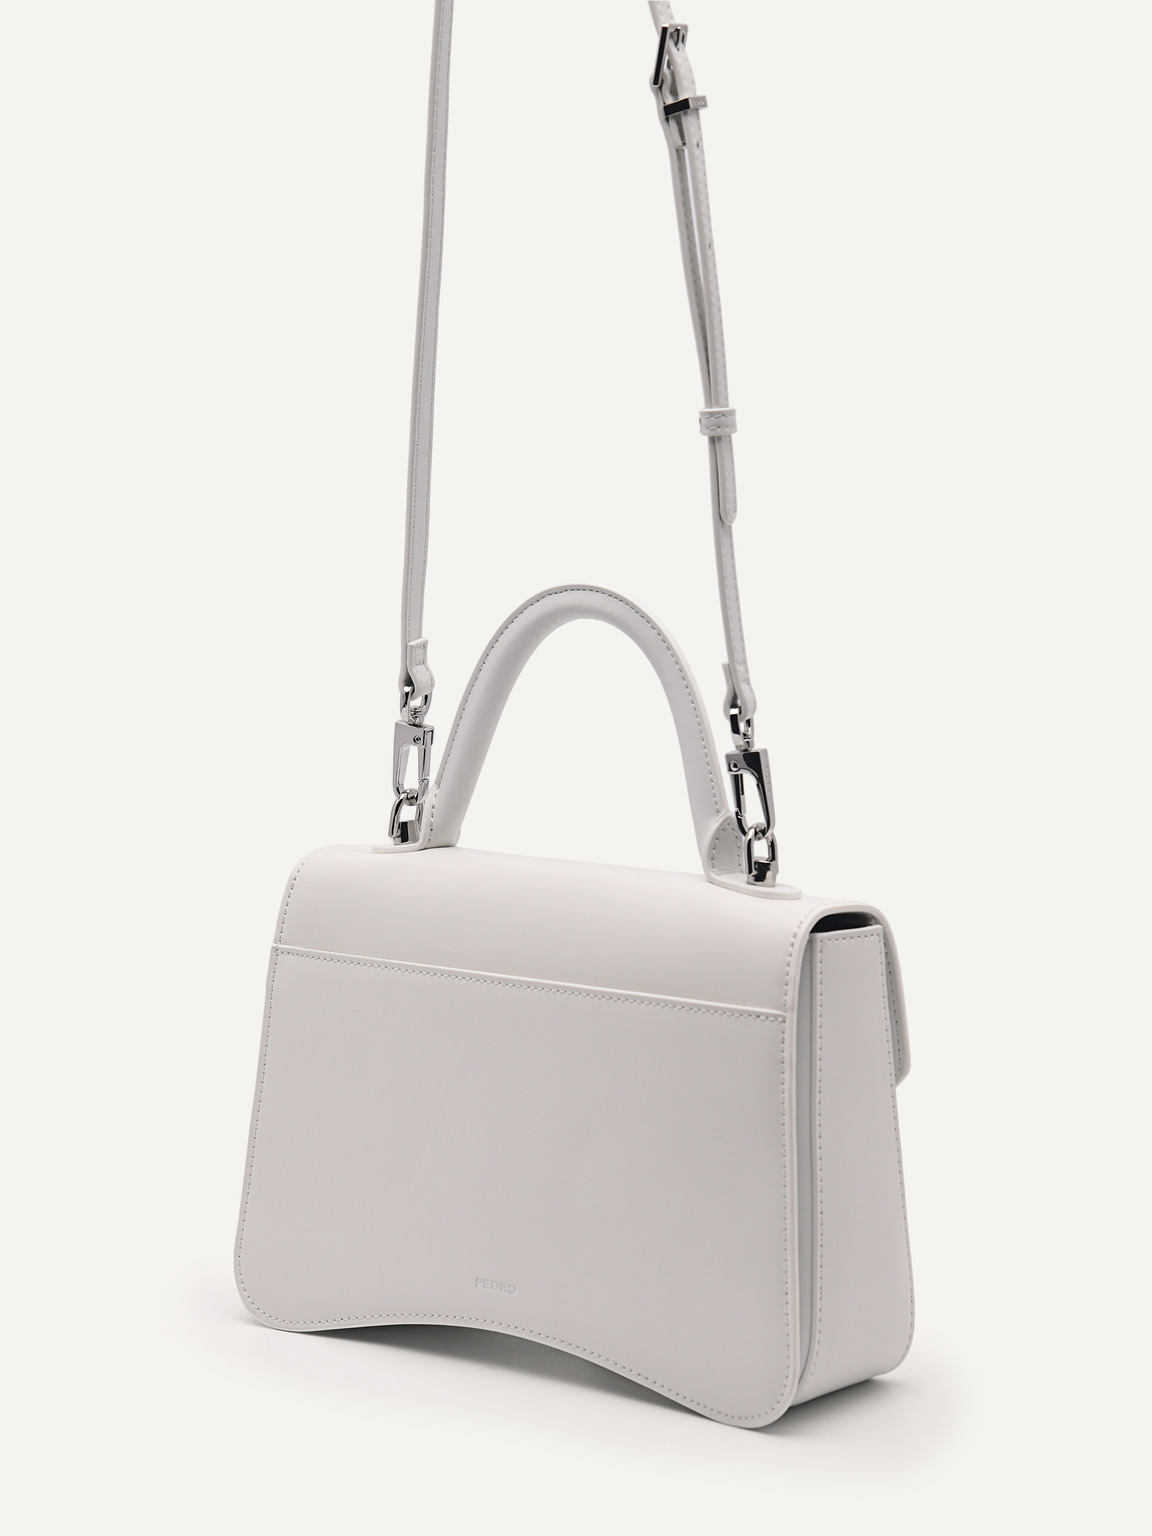 Zenith Leather Handbag, White